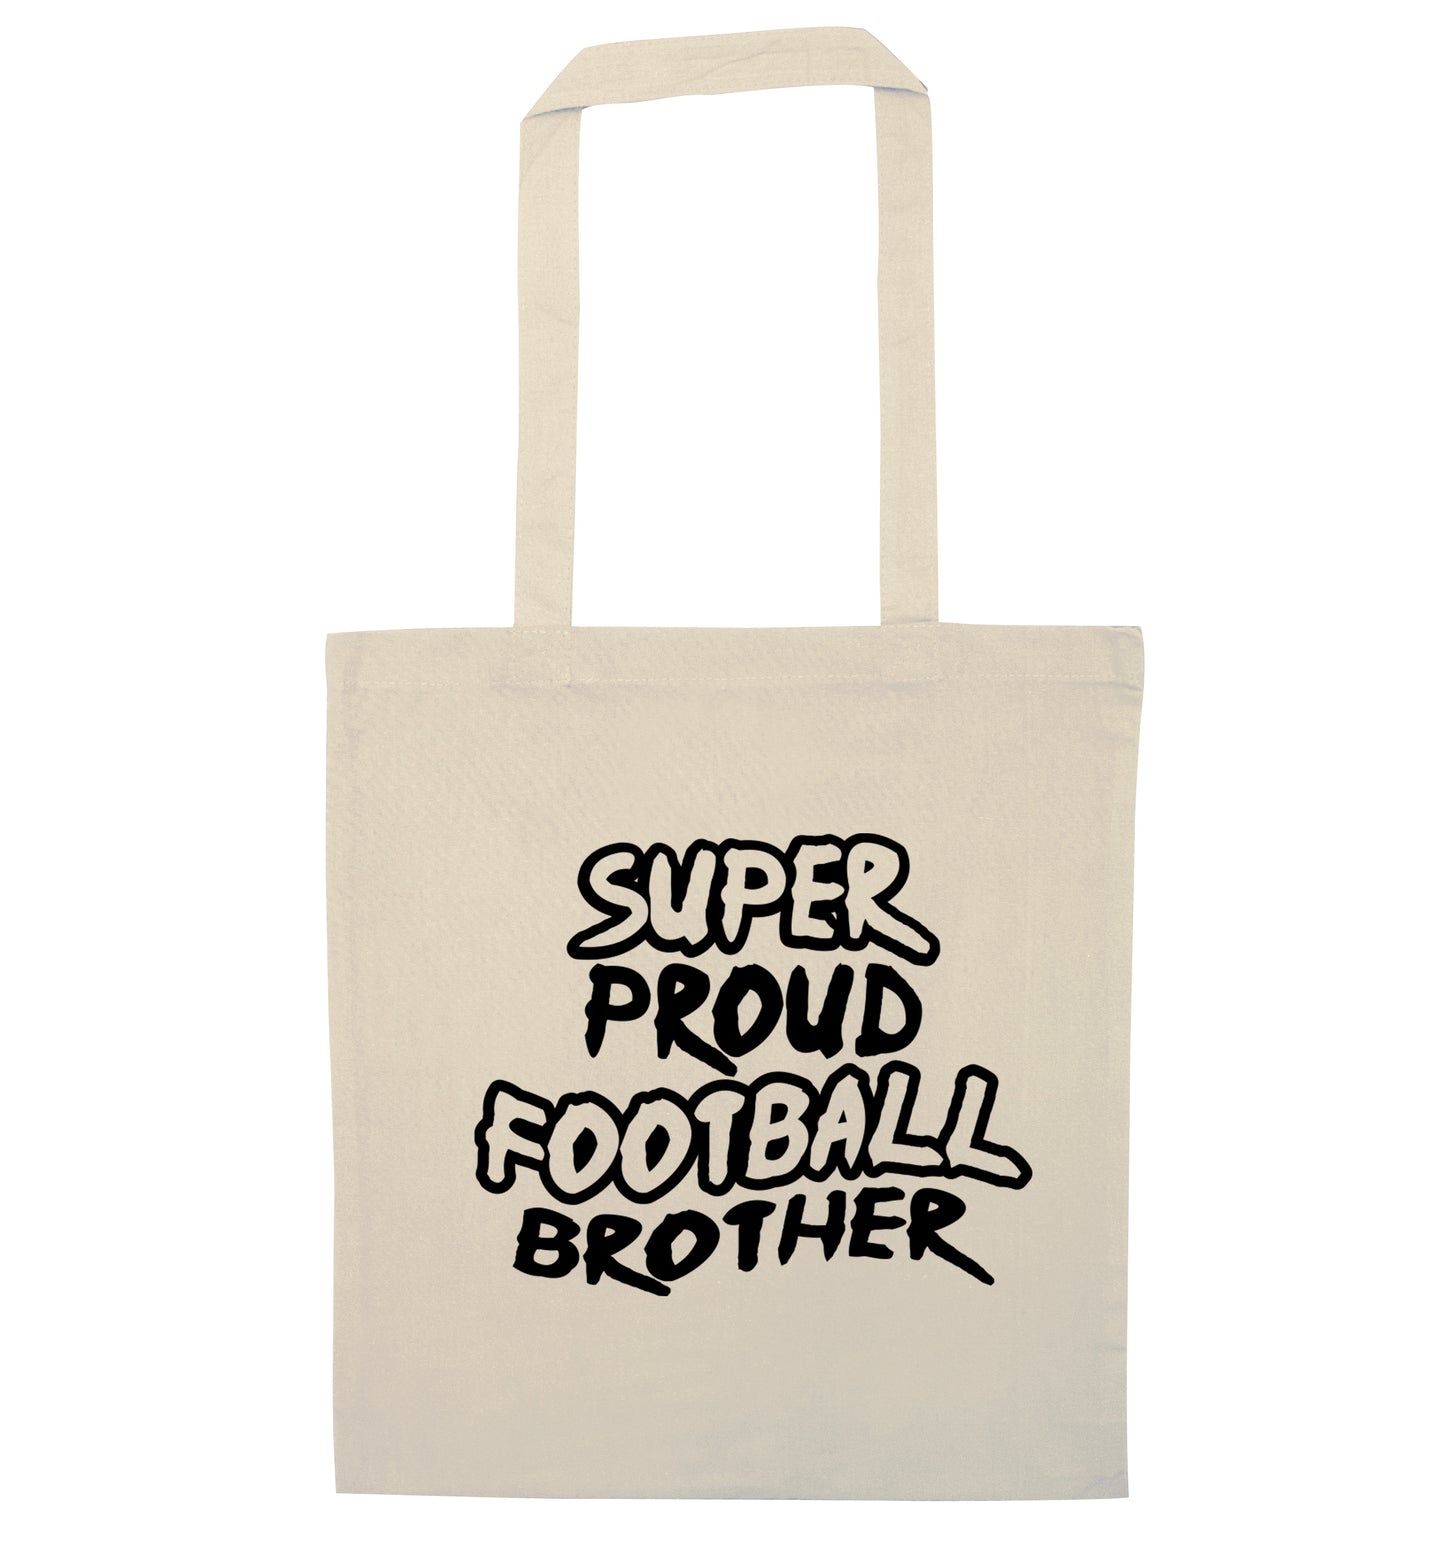 Super proud football brother natural tote bag